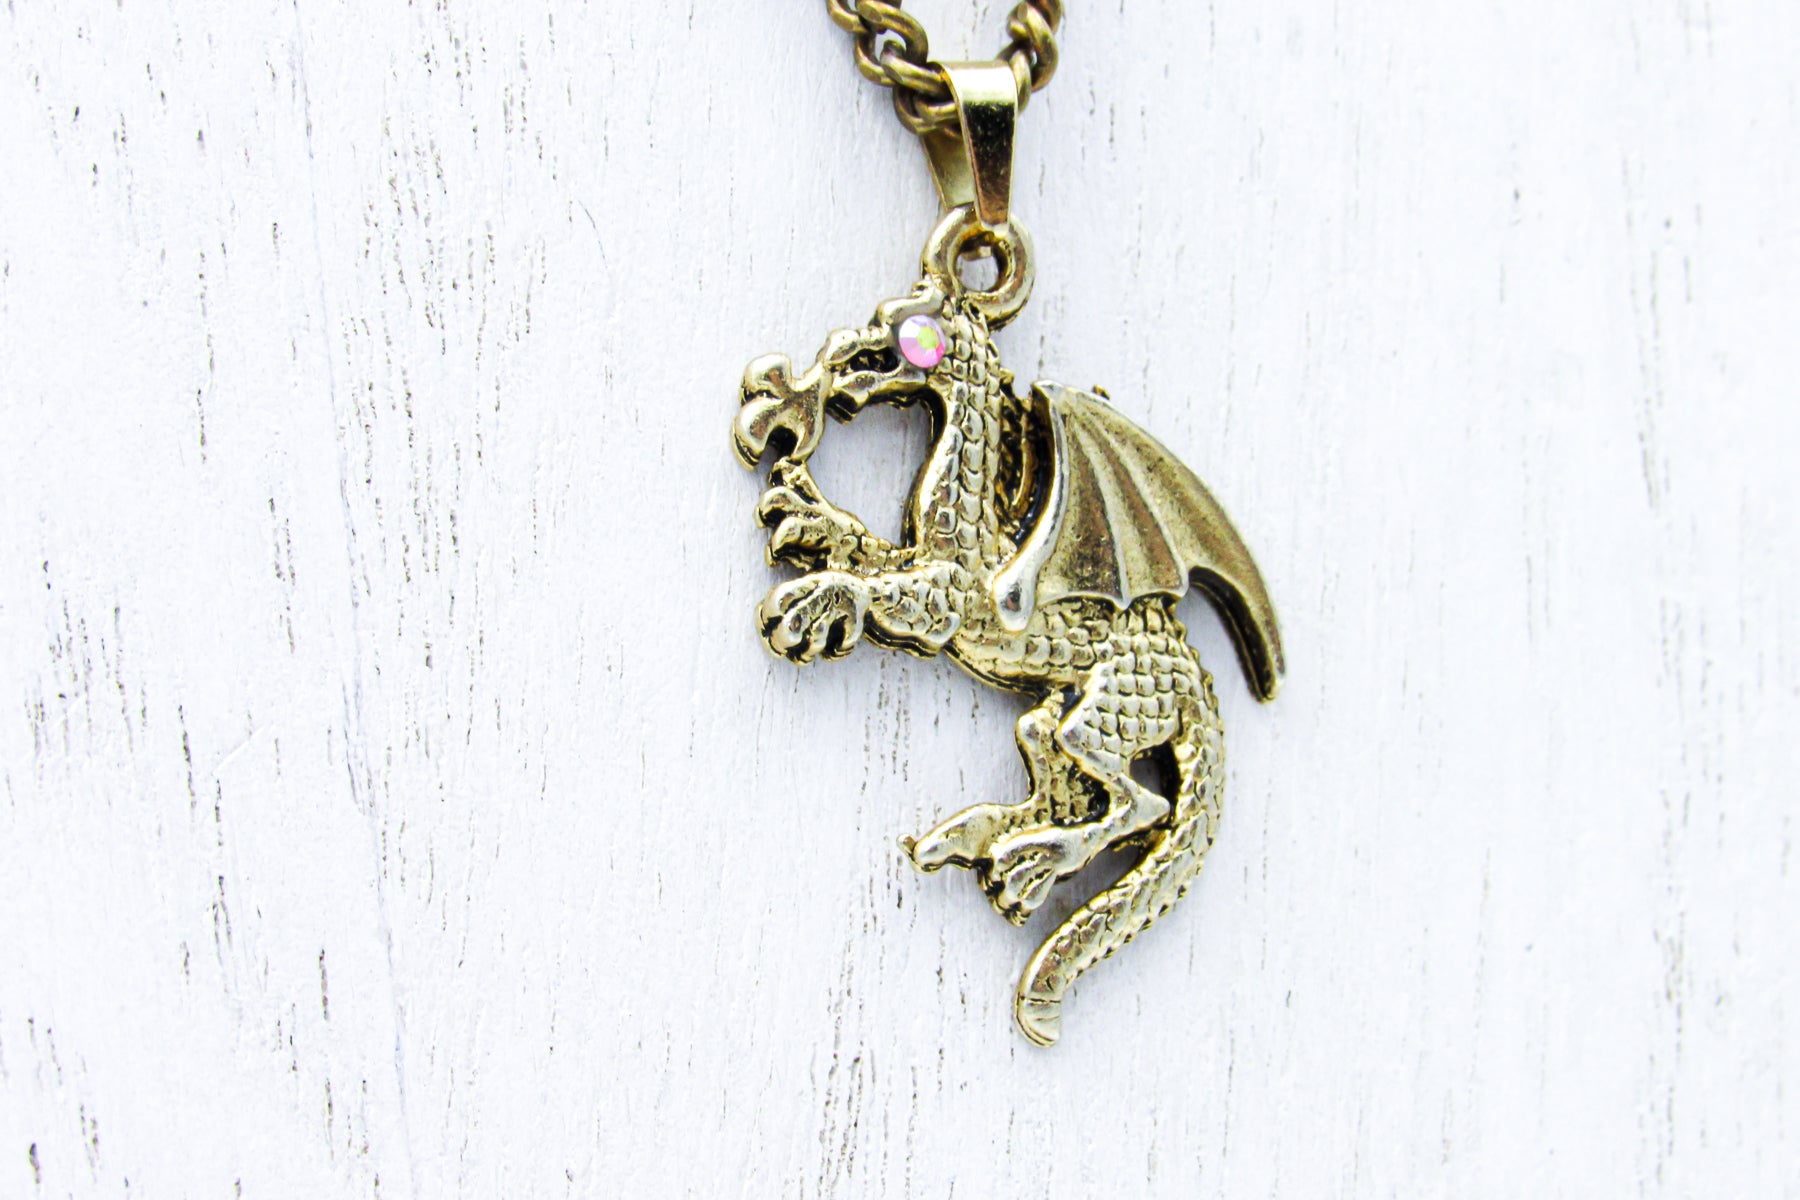 European Dragon Pendant Necklace With Rhinestone Crystal Eye